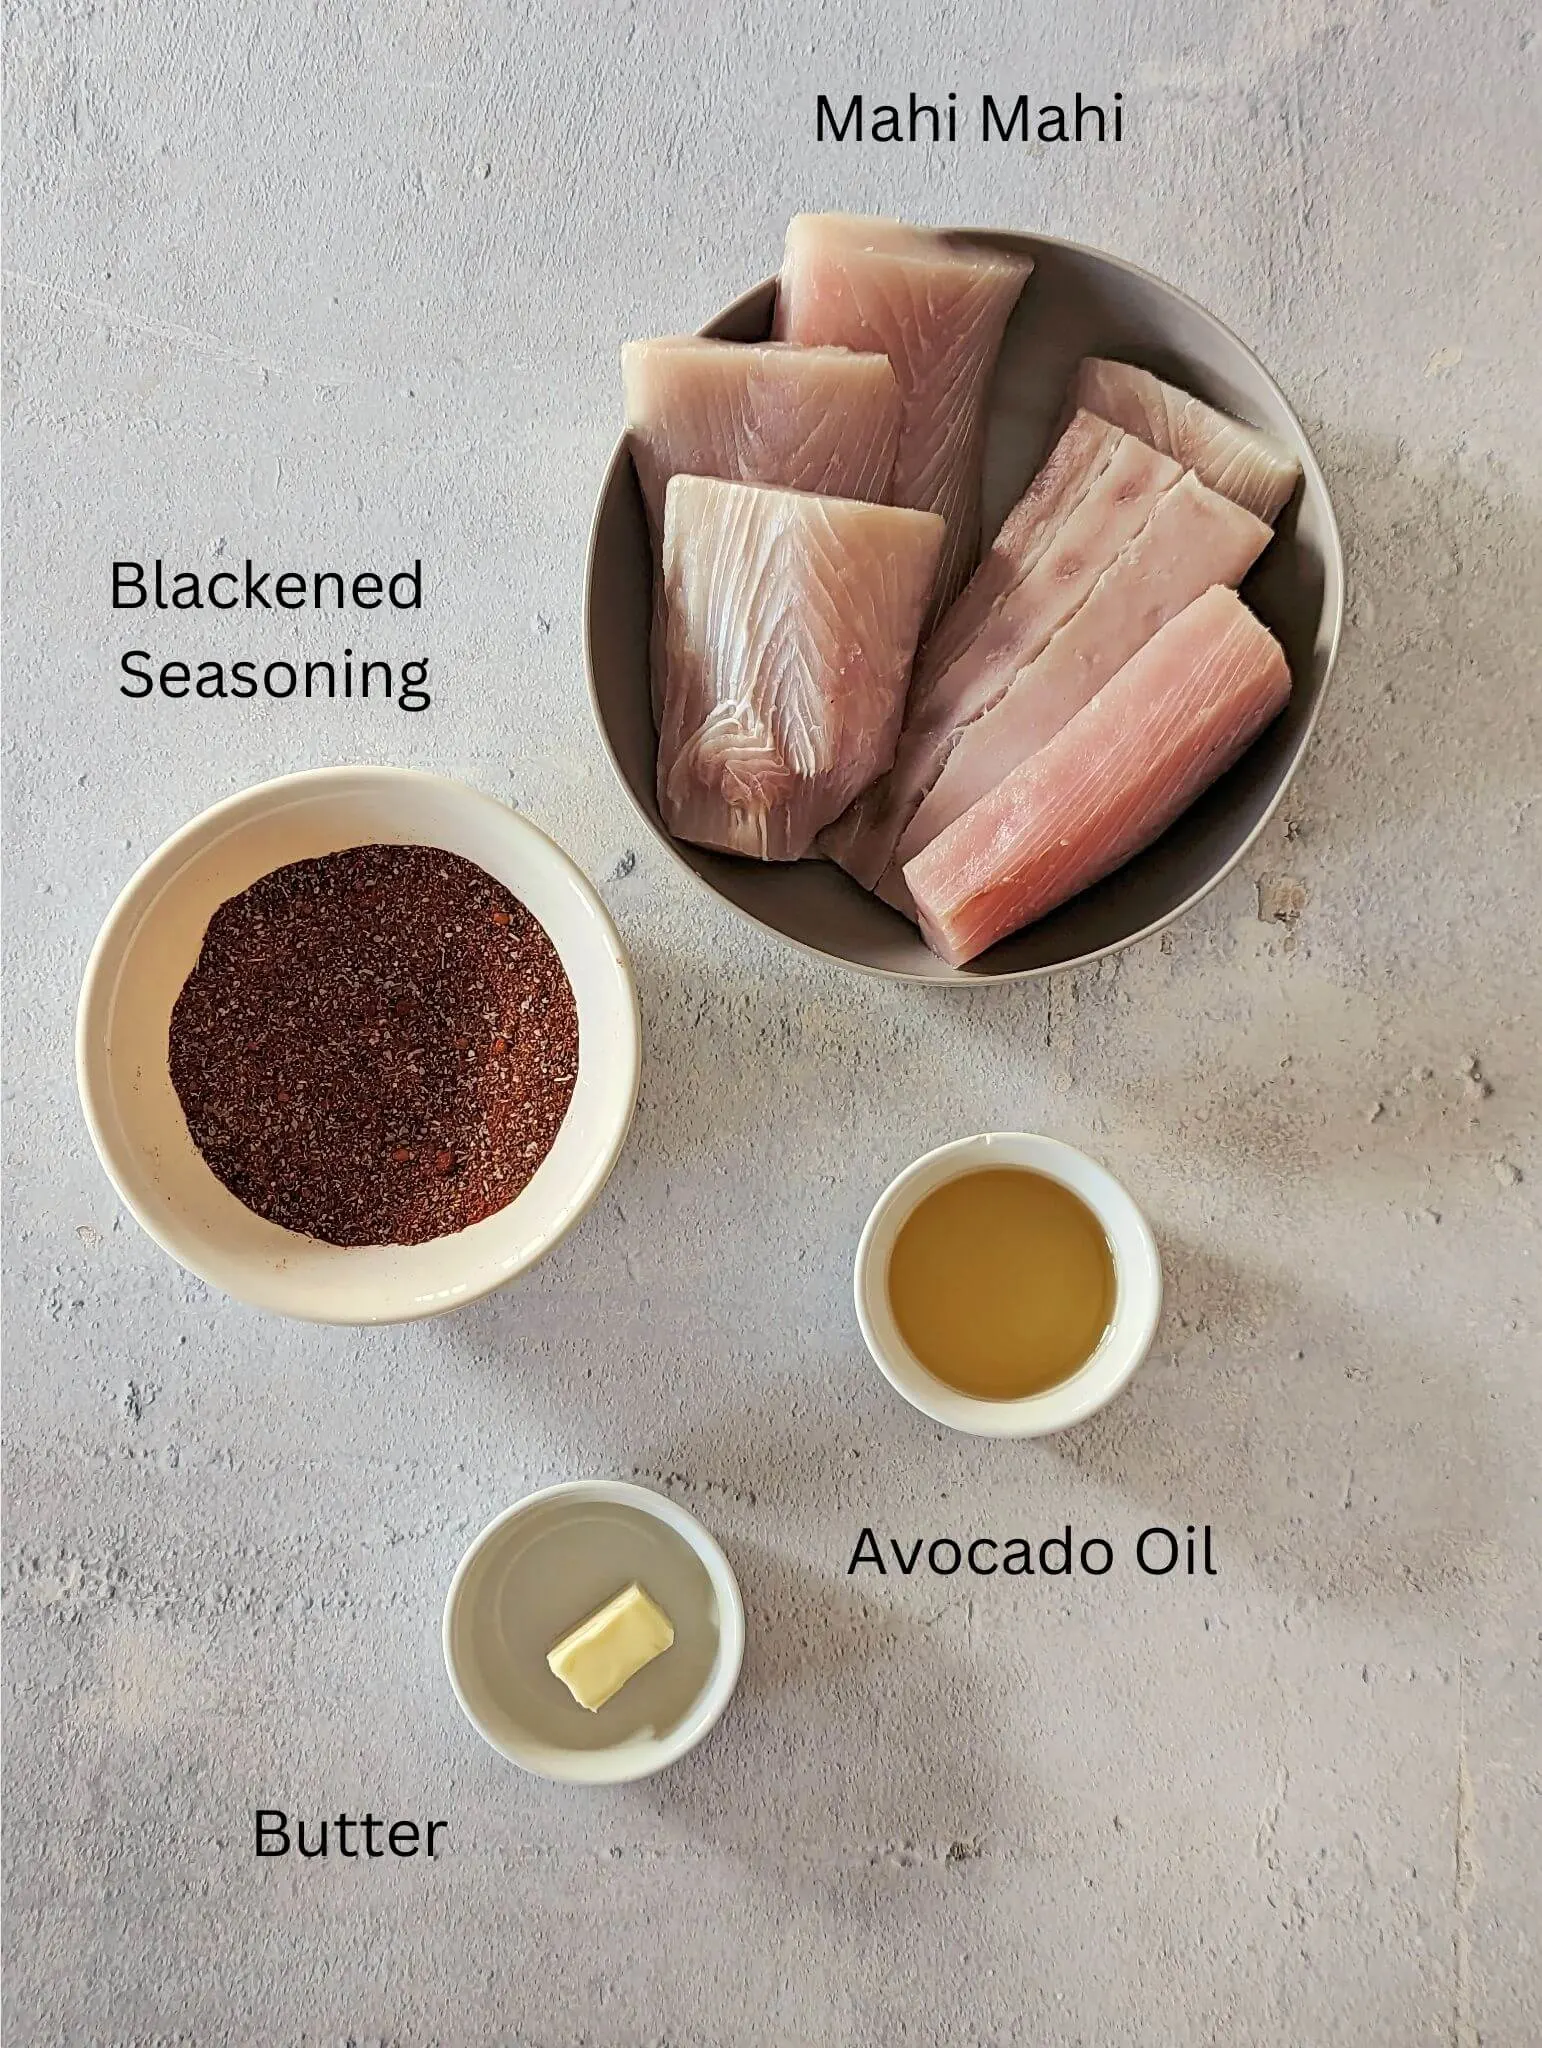 A image showing the ingredients for blackened mahi mahi.